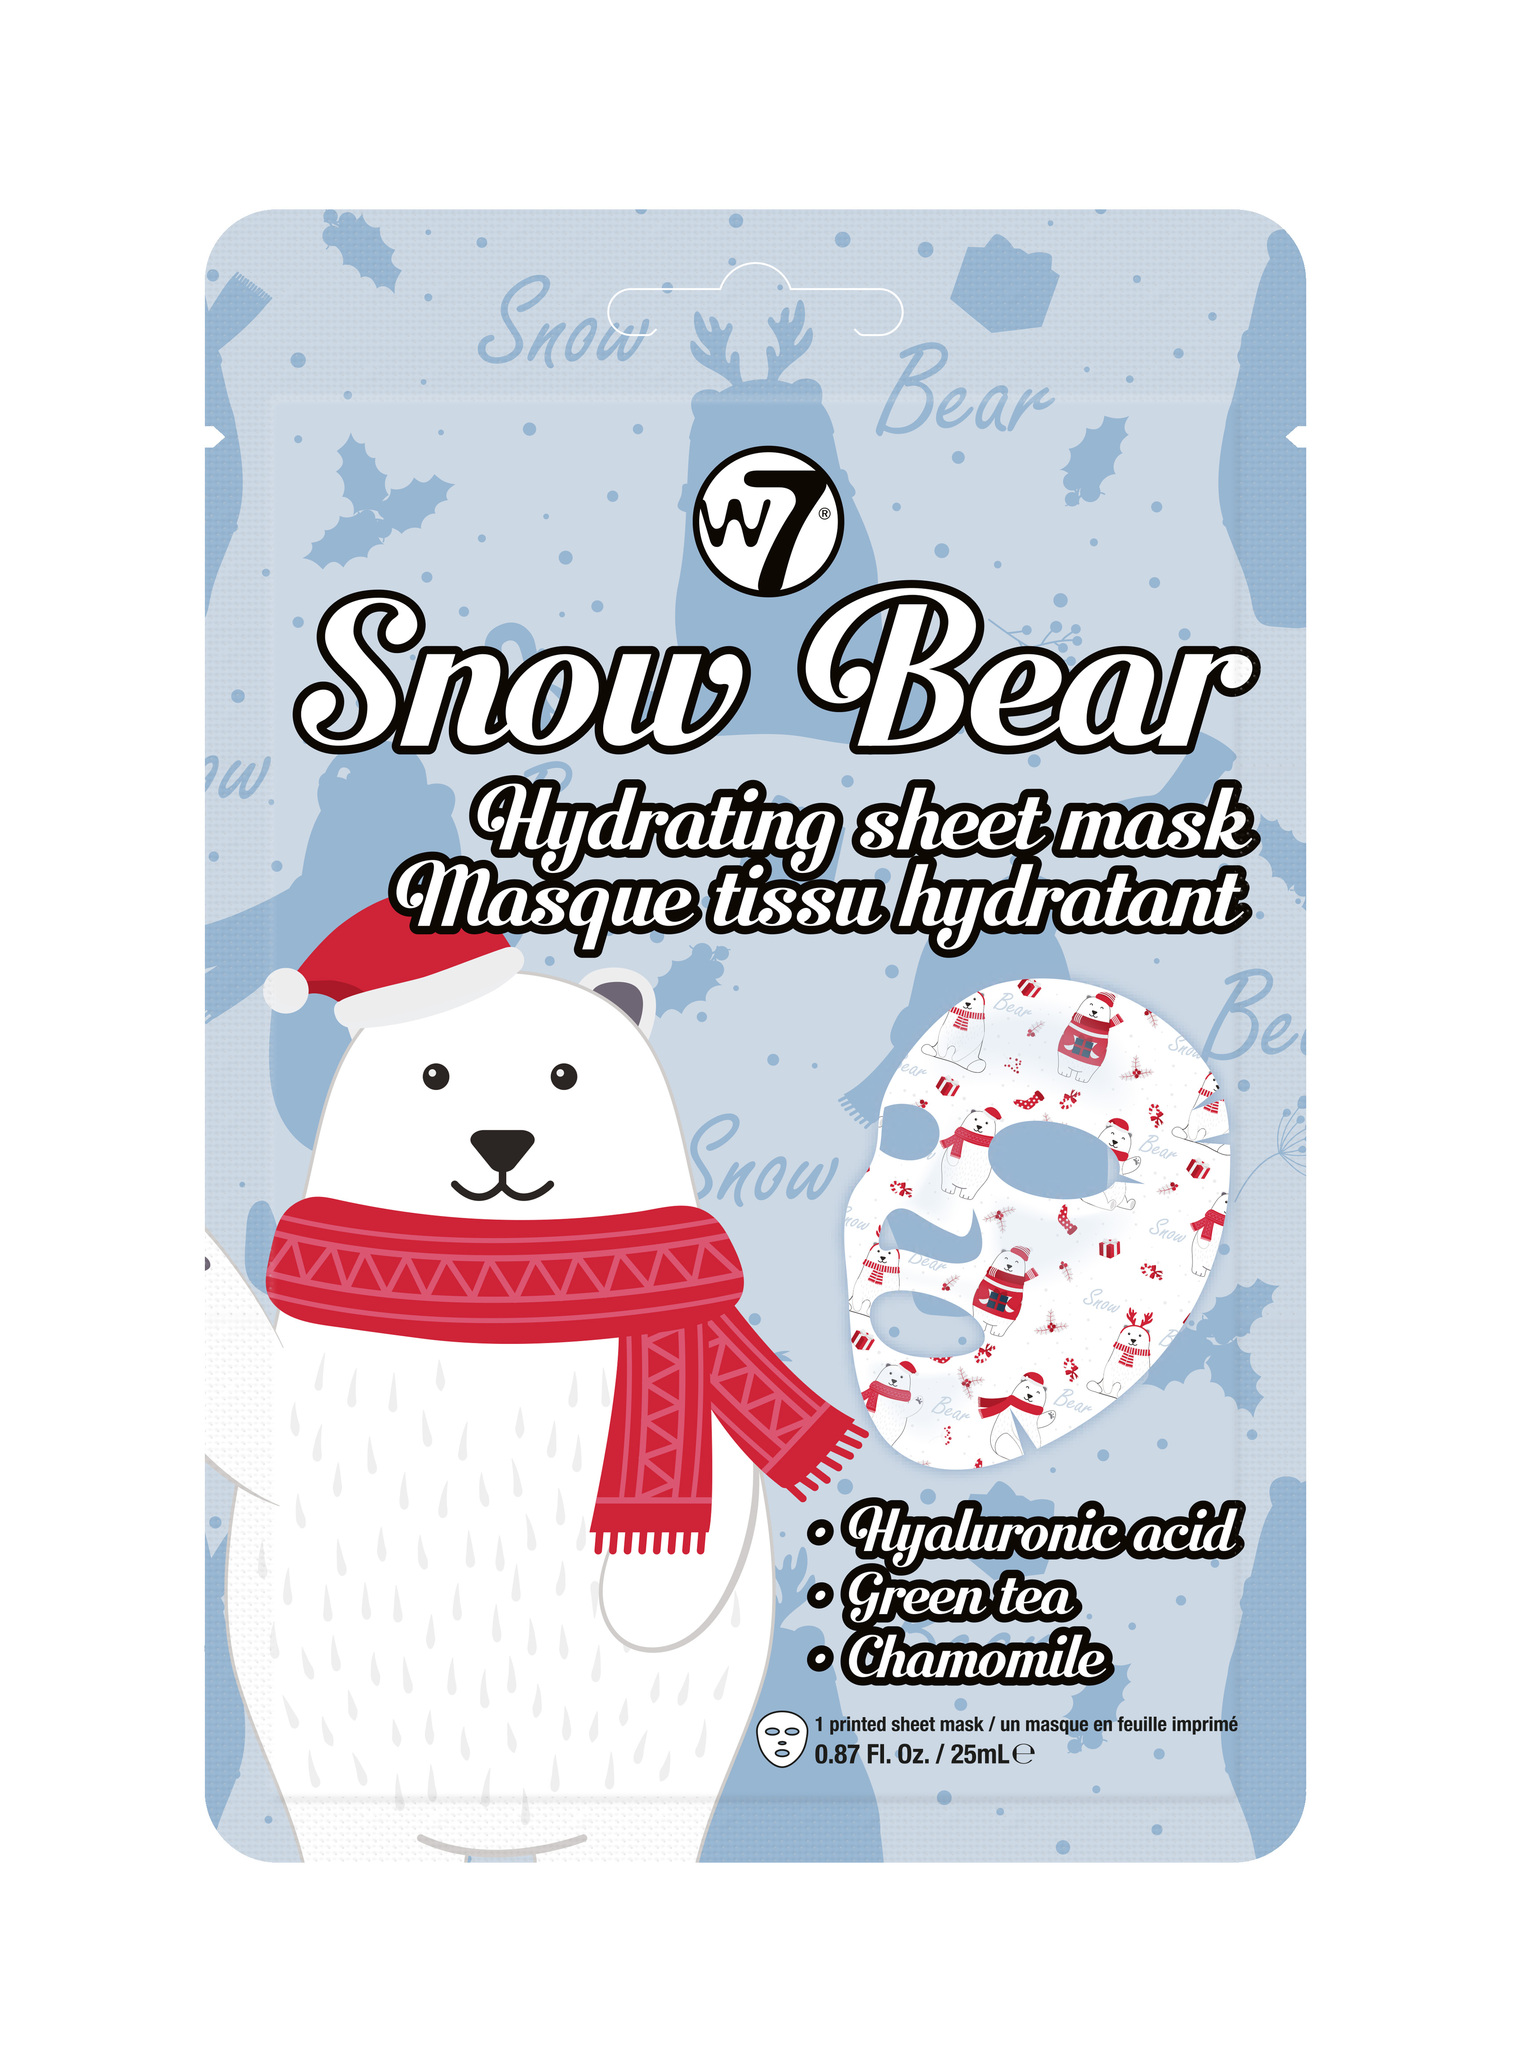 W7 Snow Bear Hydrating Sheet Mask